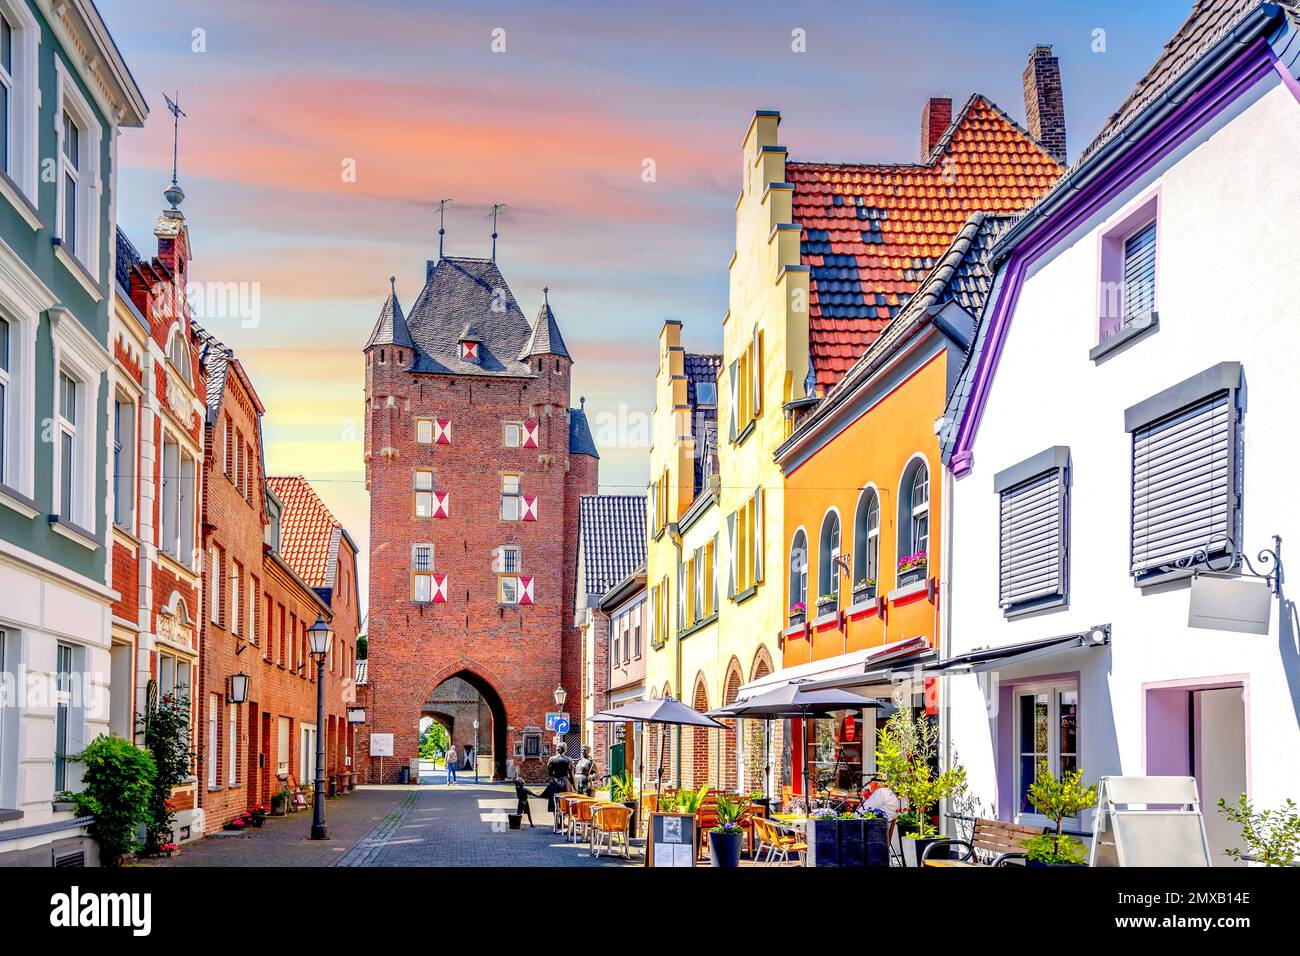 Old city of Xanten, Germany Stock Photo